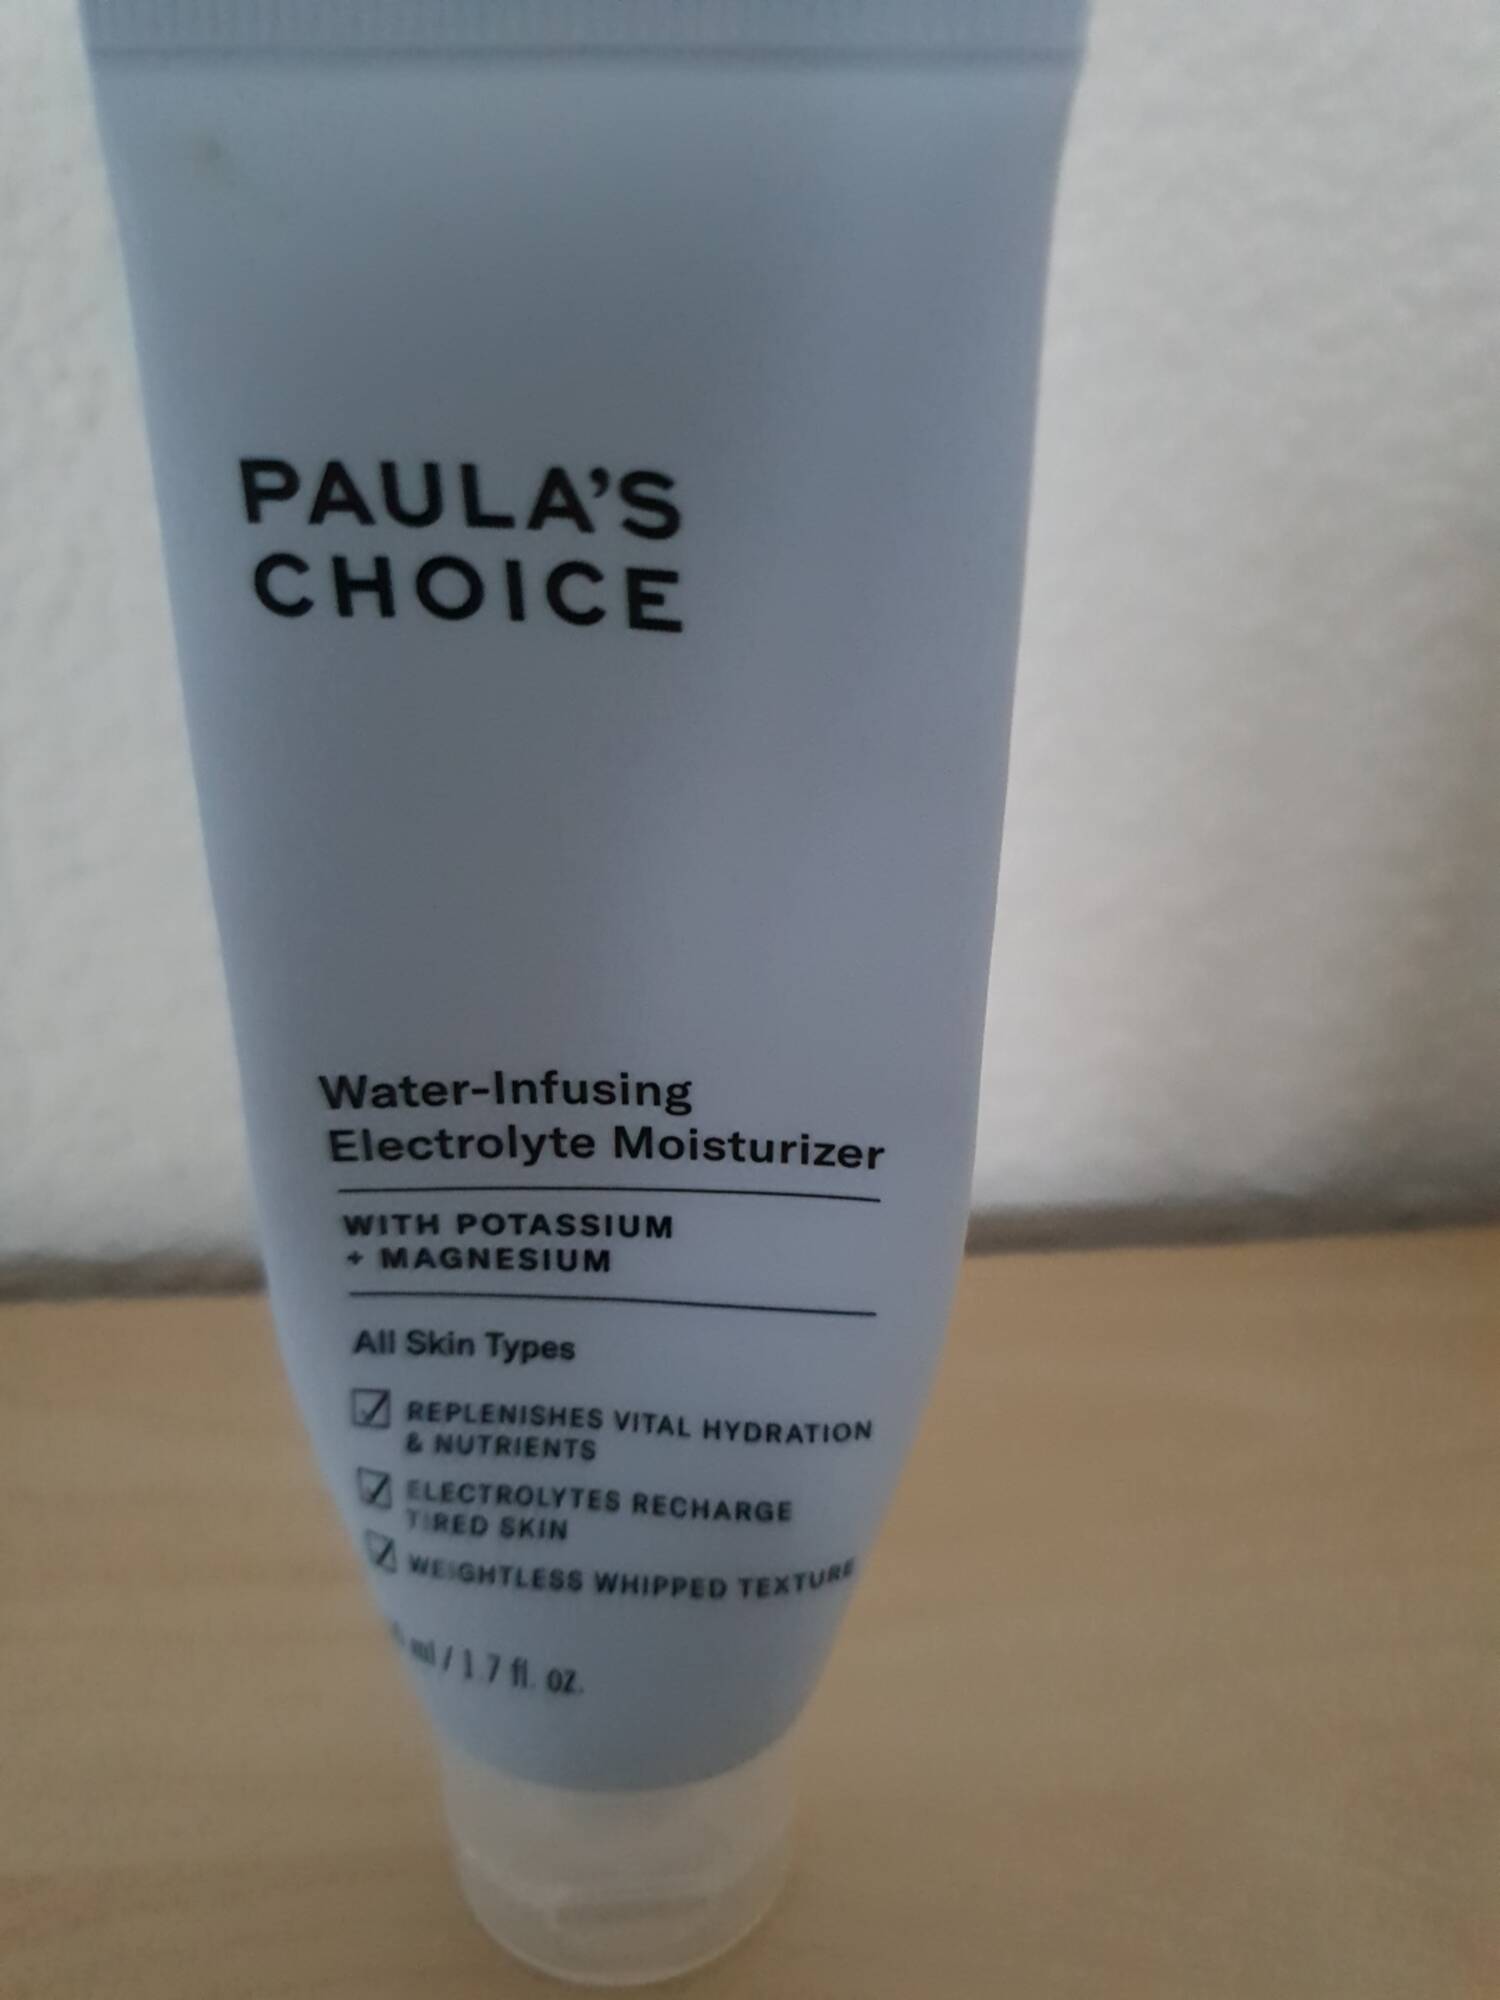 PAULA'S CHOISE - Water-Infusion electrolyte moisturizer